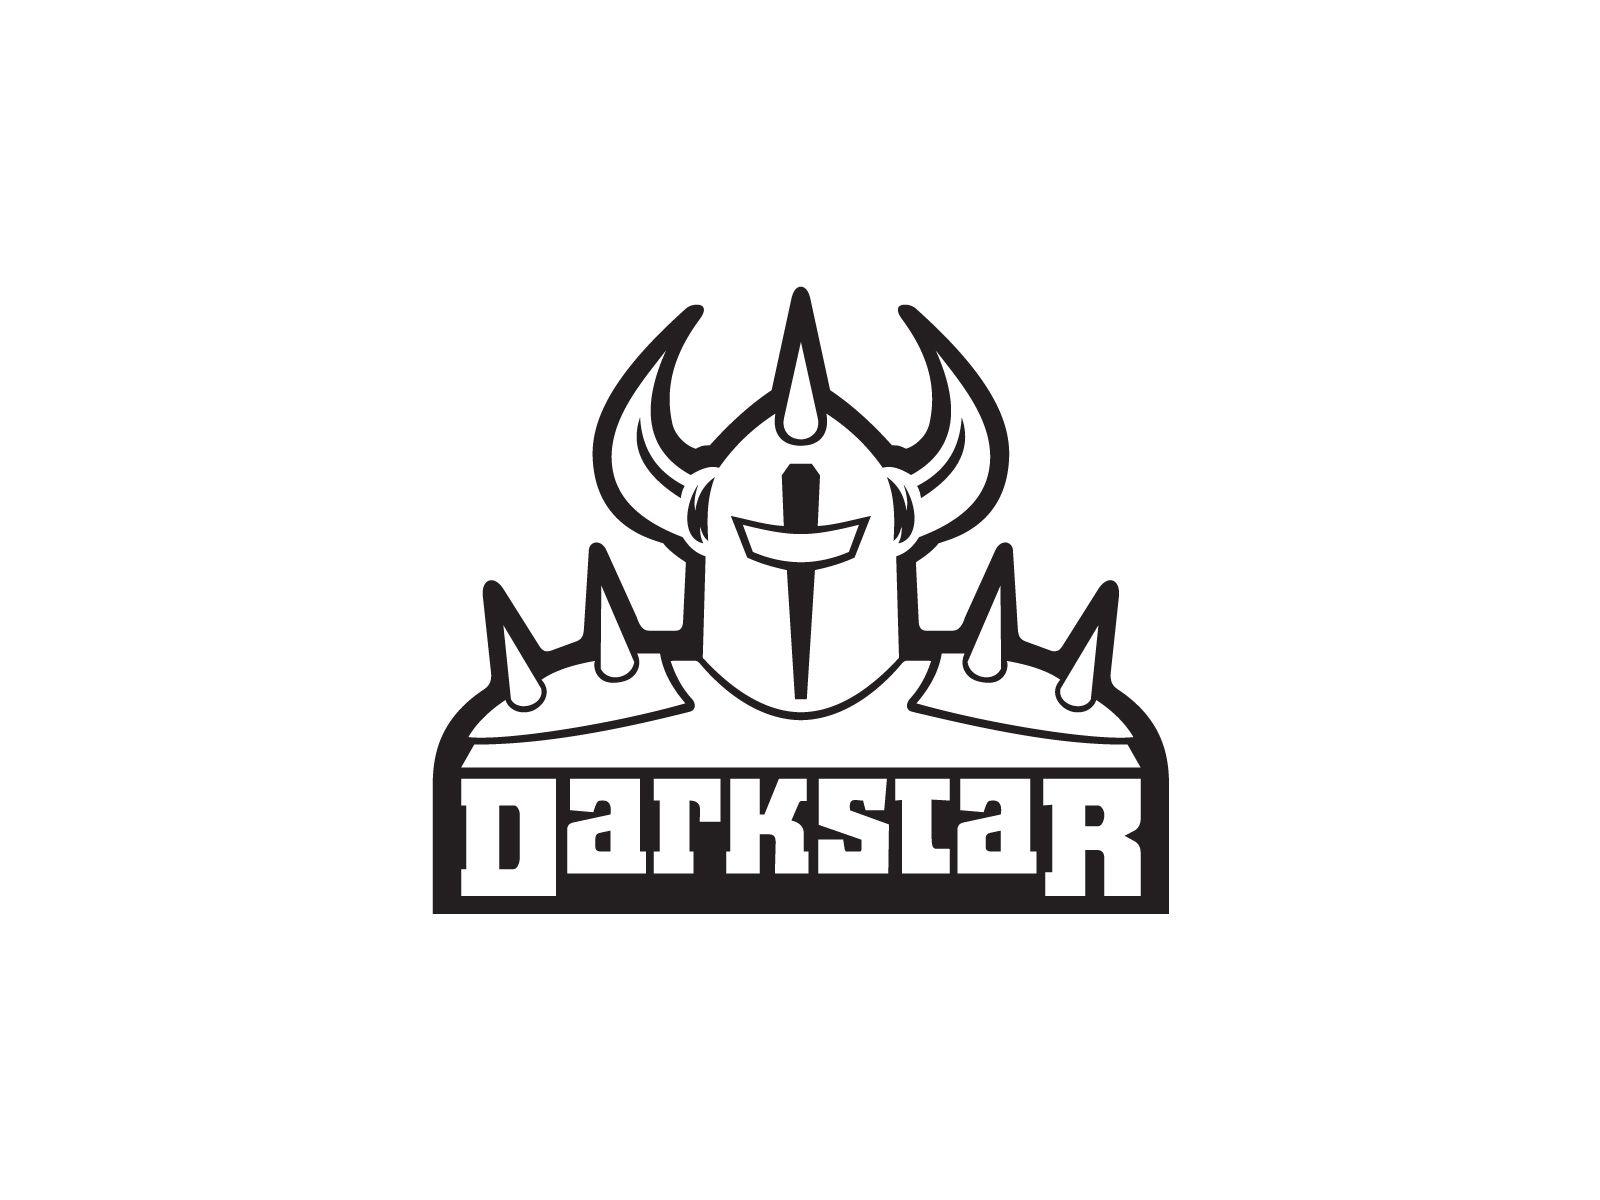 Darkstar Skateboard Wallpaper Image & Picture